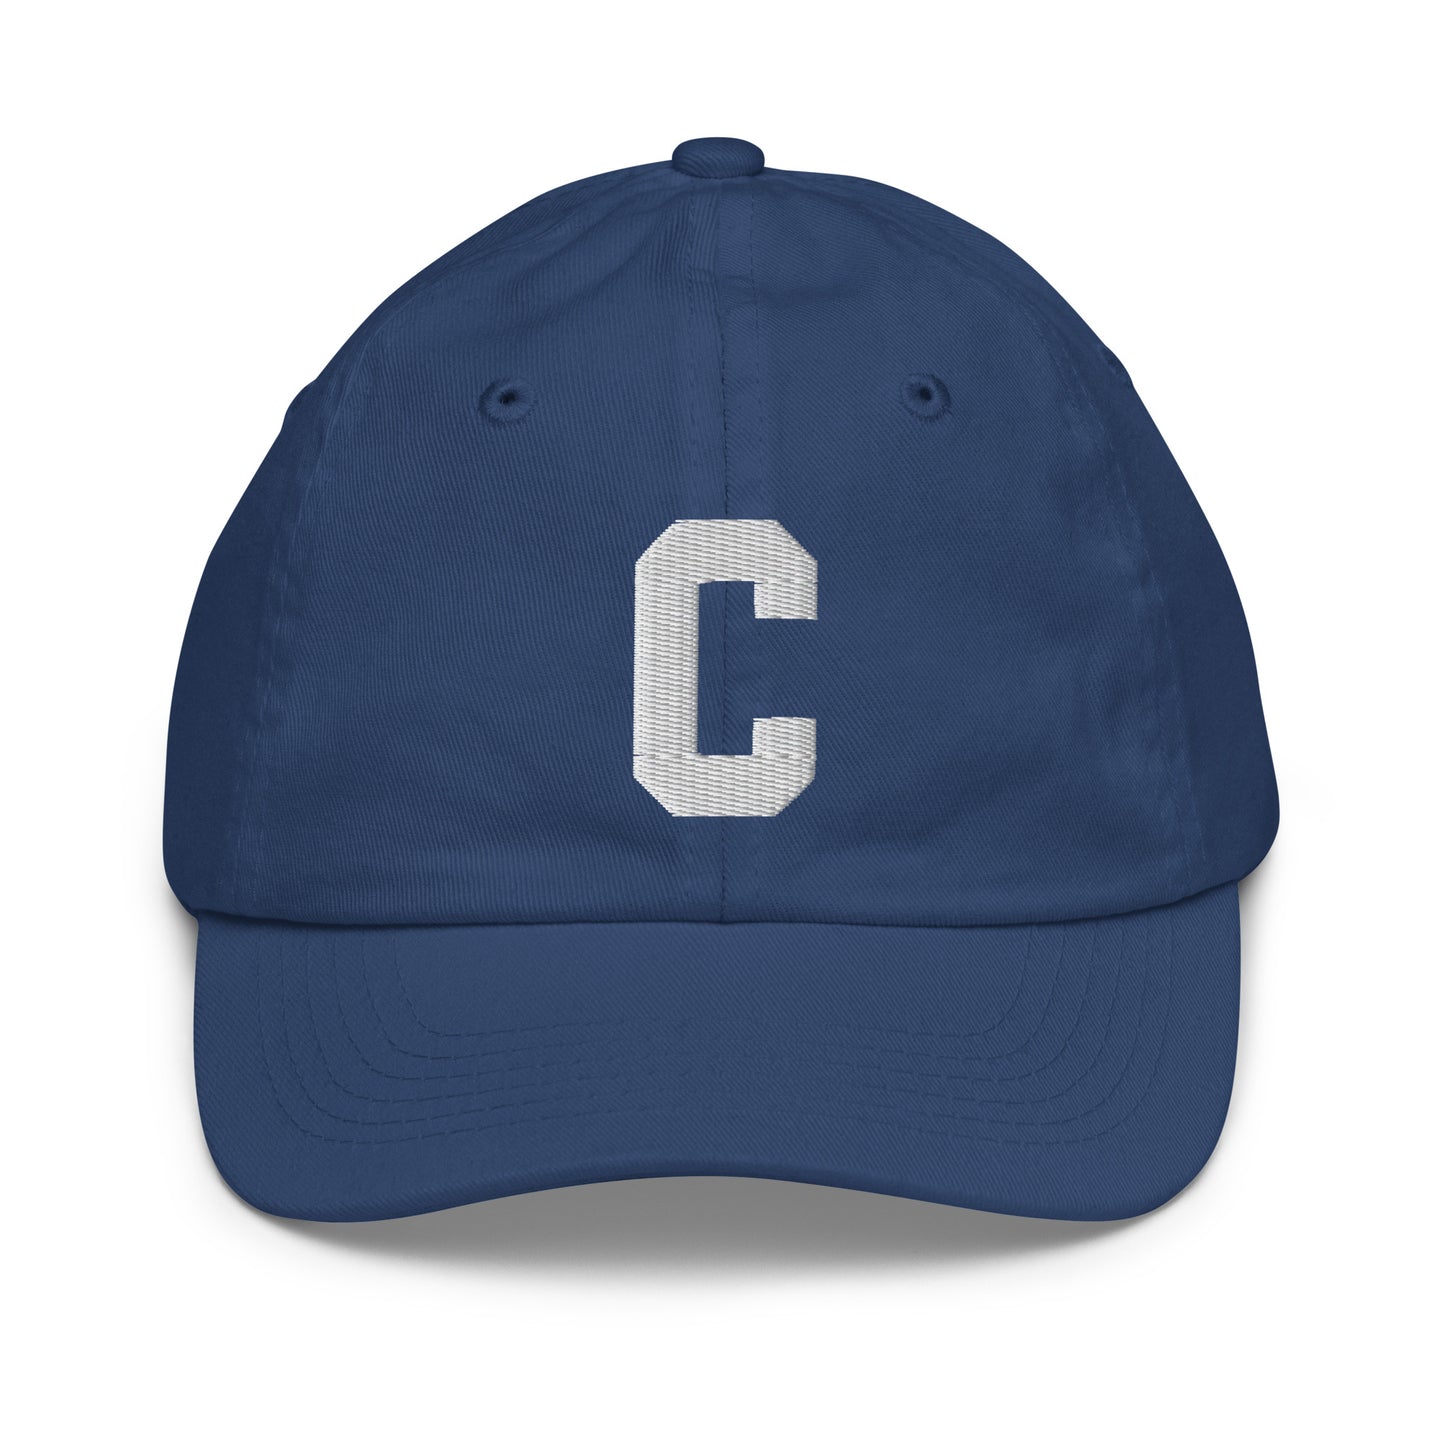 Youth C Baseball Cap